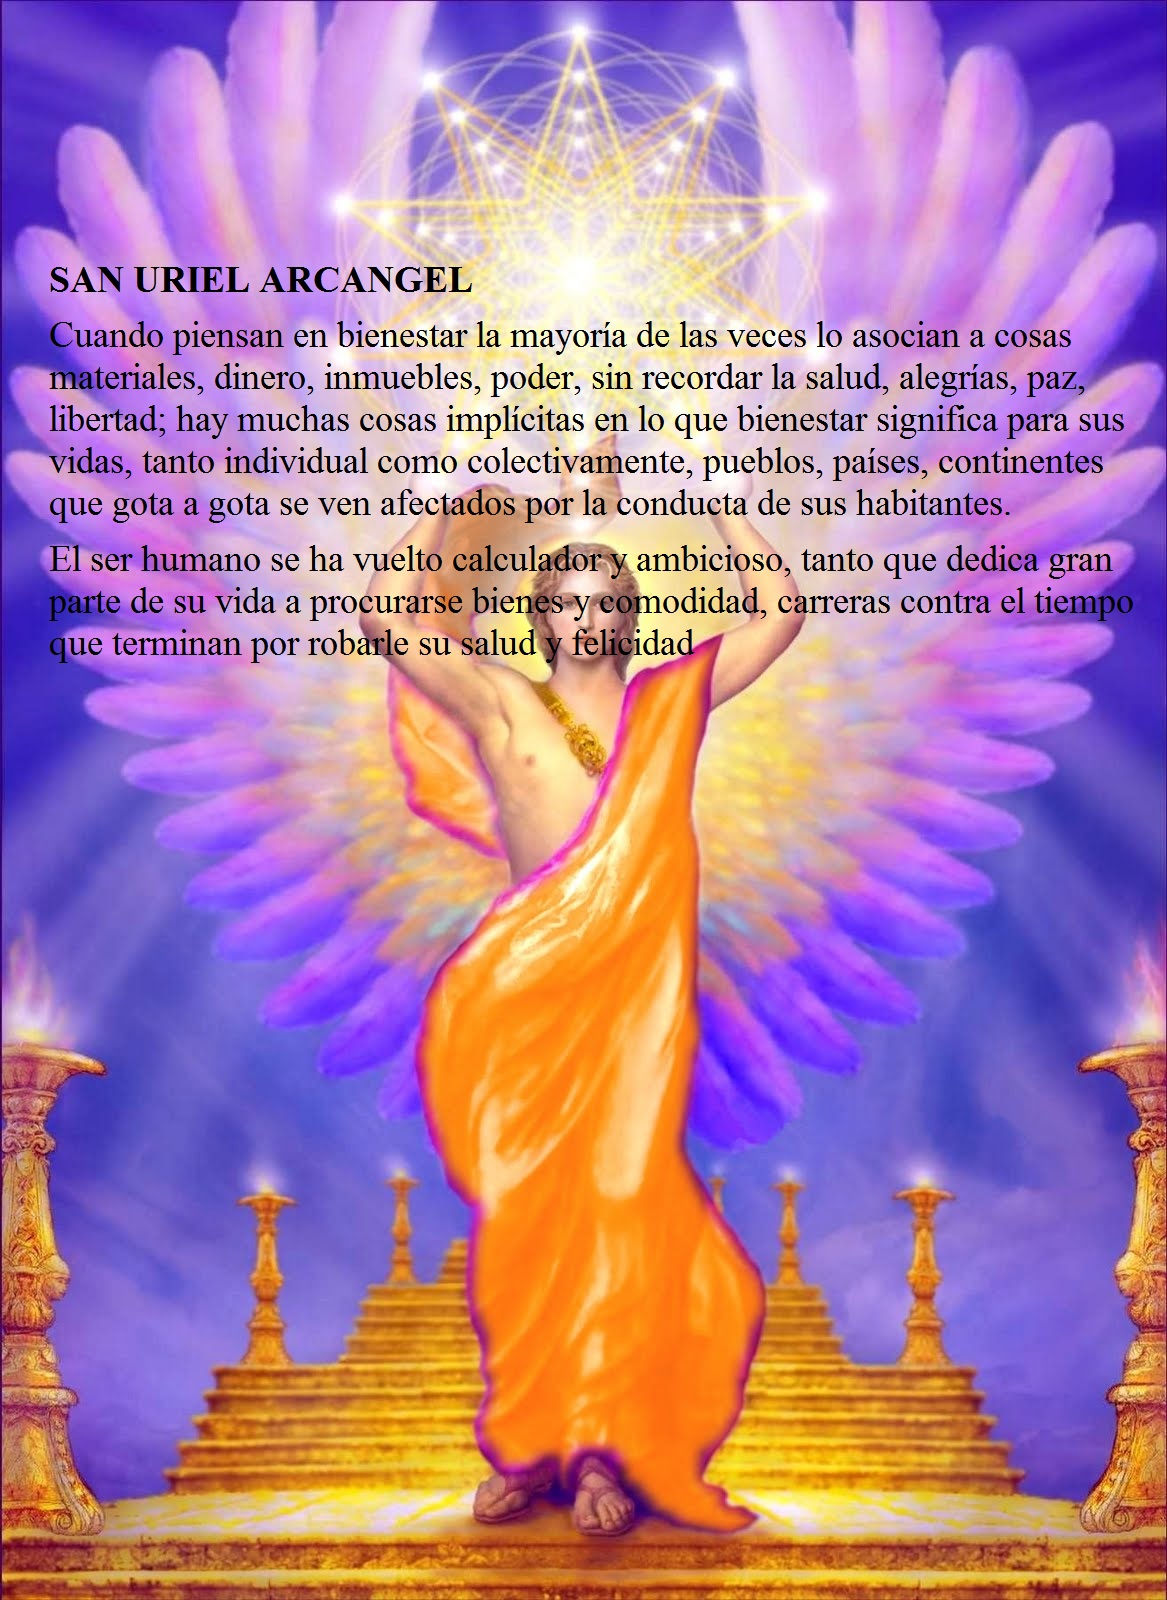 San Uriel Arcangel